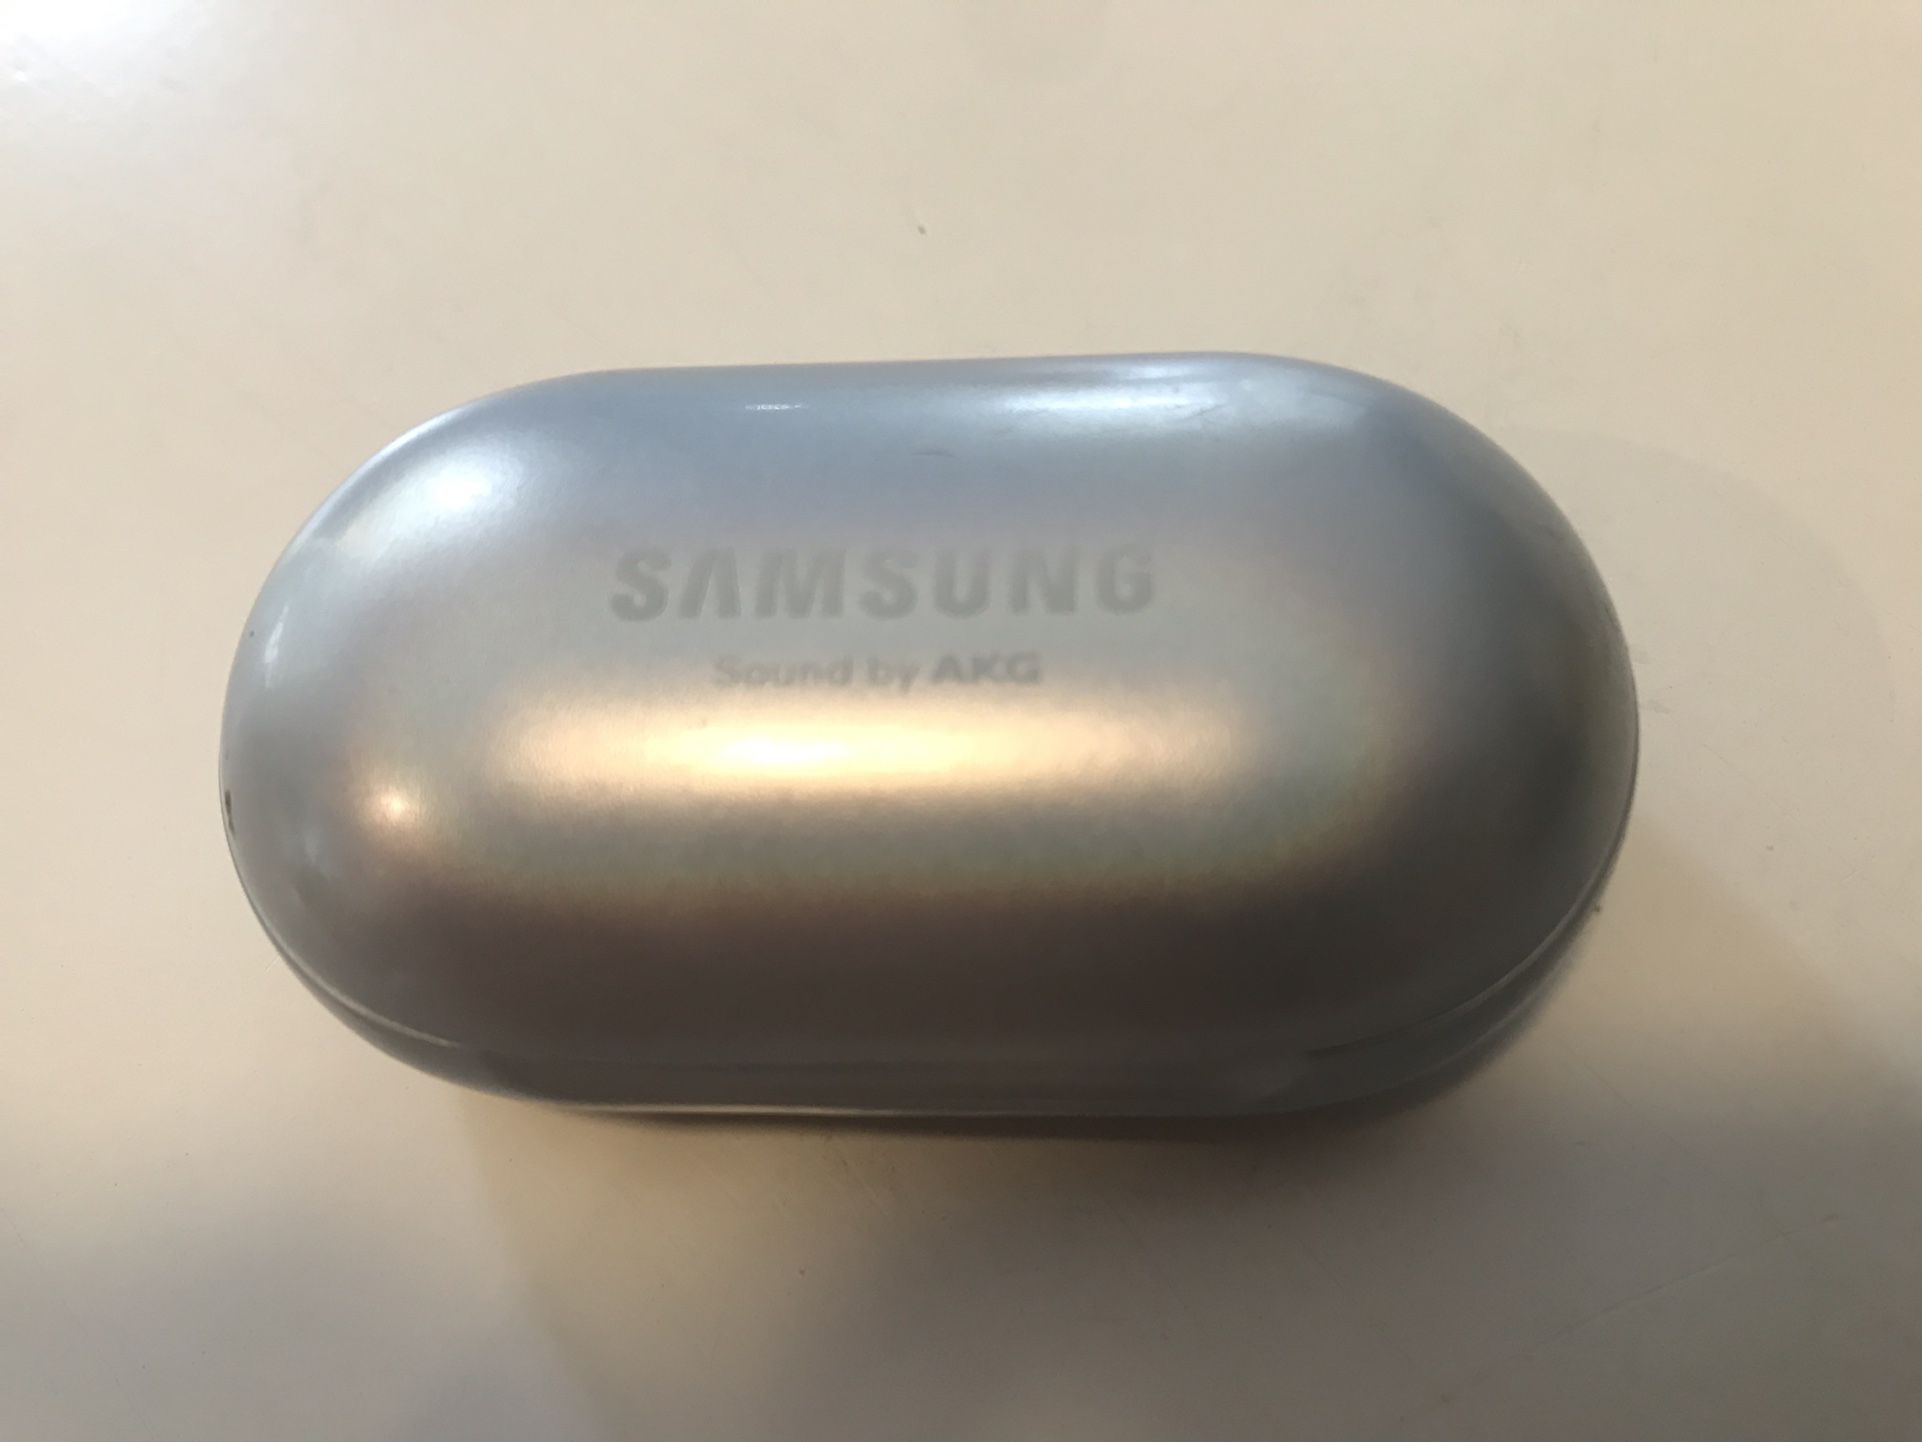 Samsung Galaxy Buds charging case